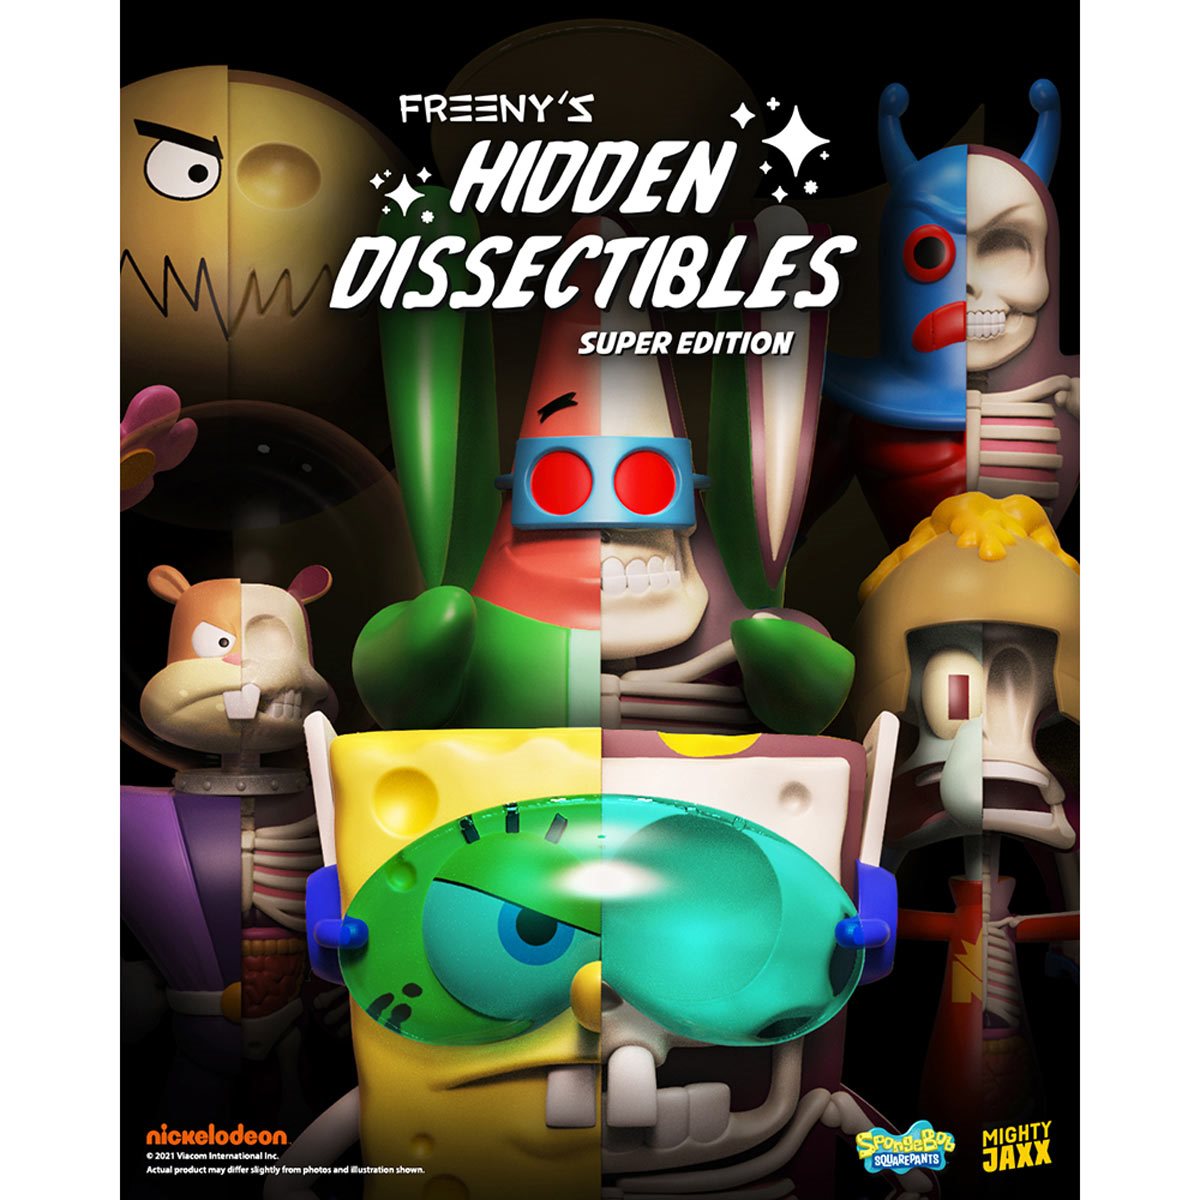 Mighty Jaxx Hidden Dissectibles Spongebob SquarePants Blind Box (series 4 - Super Edition)